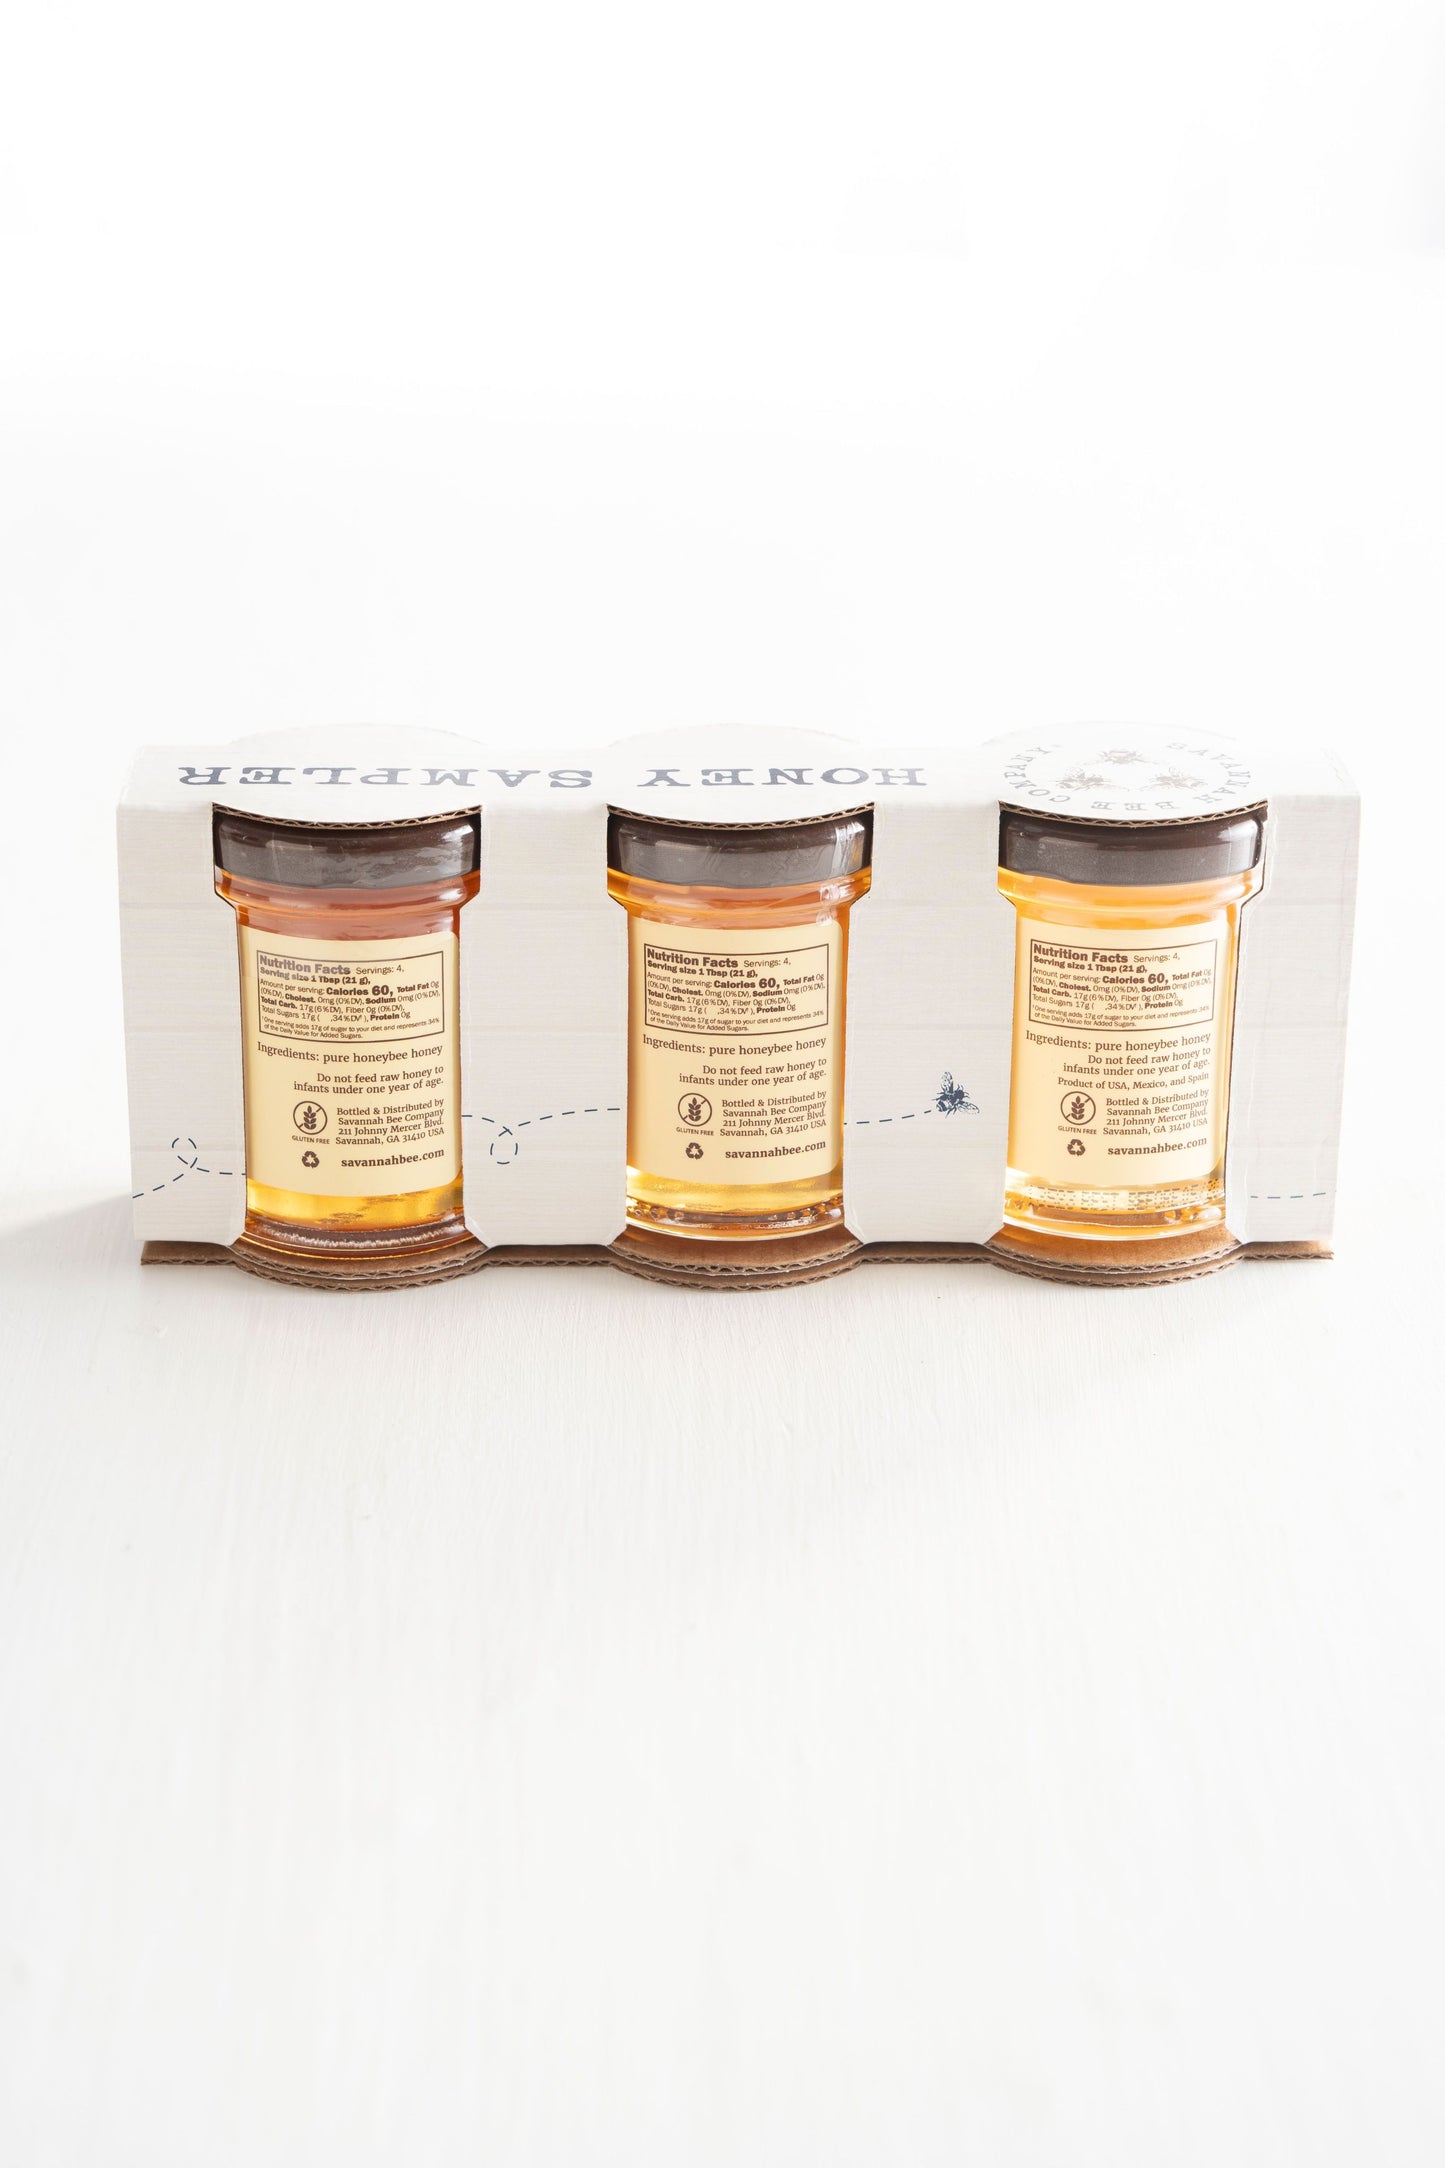 The Southern Sample Set includes 3 ounce jars of Georgia Wildflower Honey, Florida Orange Blossom Honey, and Tupelo Honey, back view